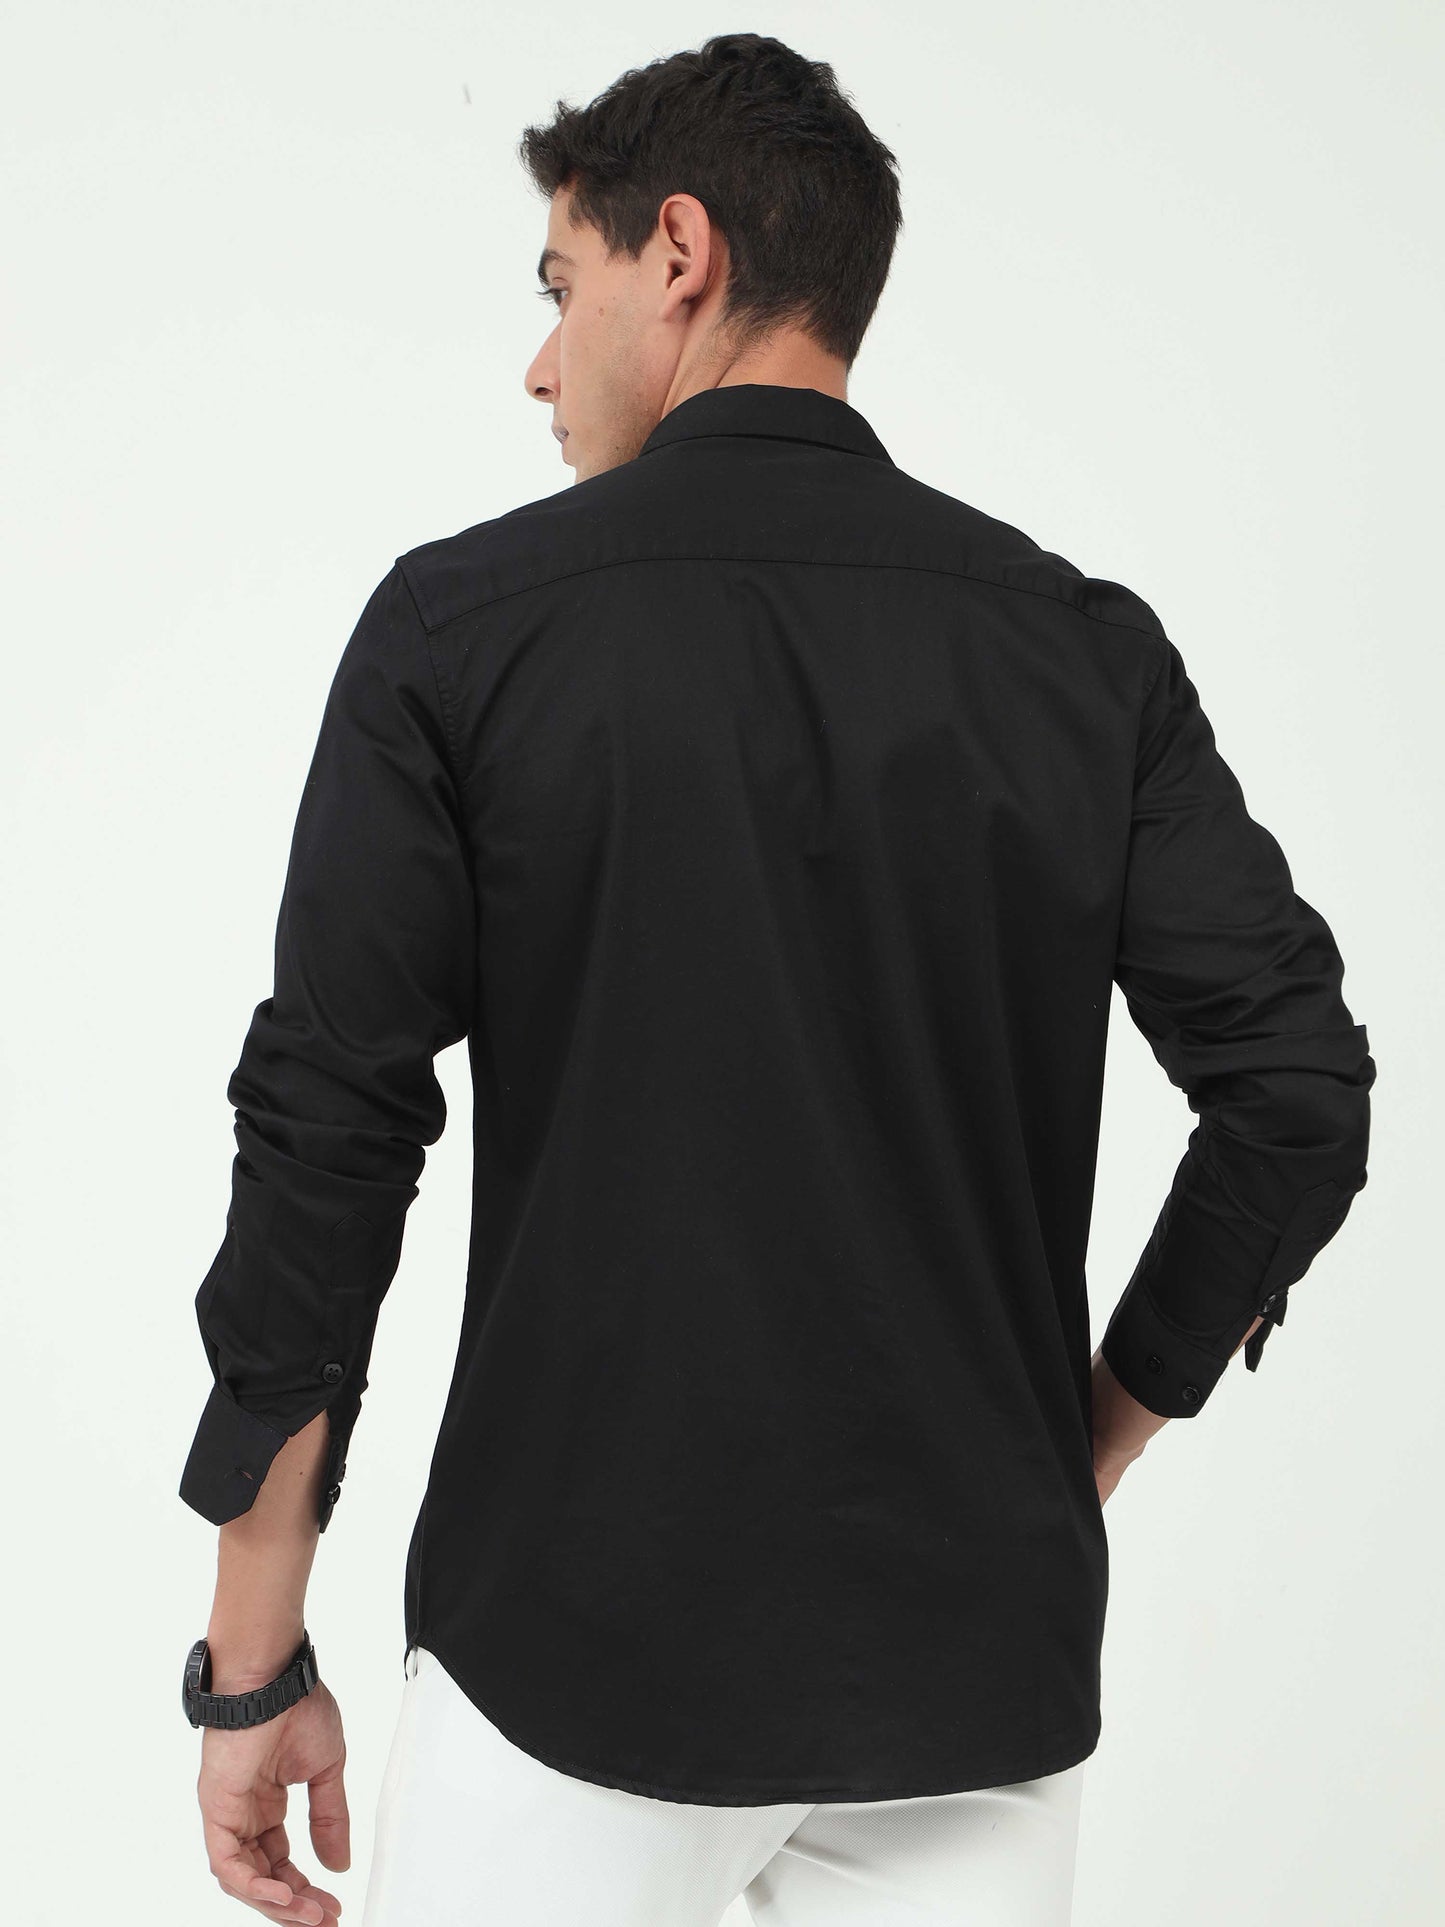 One-tone Black Satin shirt for Men